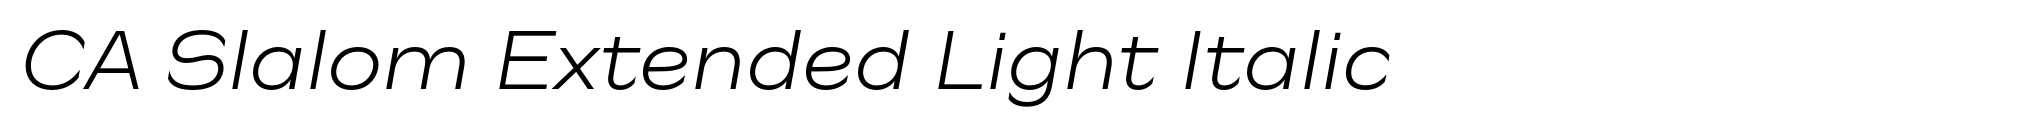 CA Slalom Extended Light Italic image